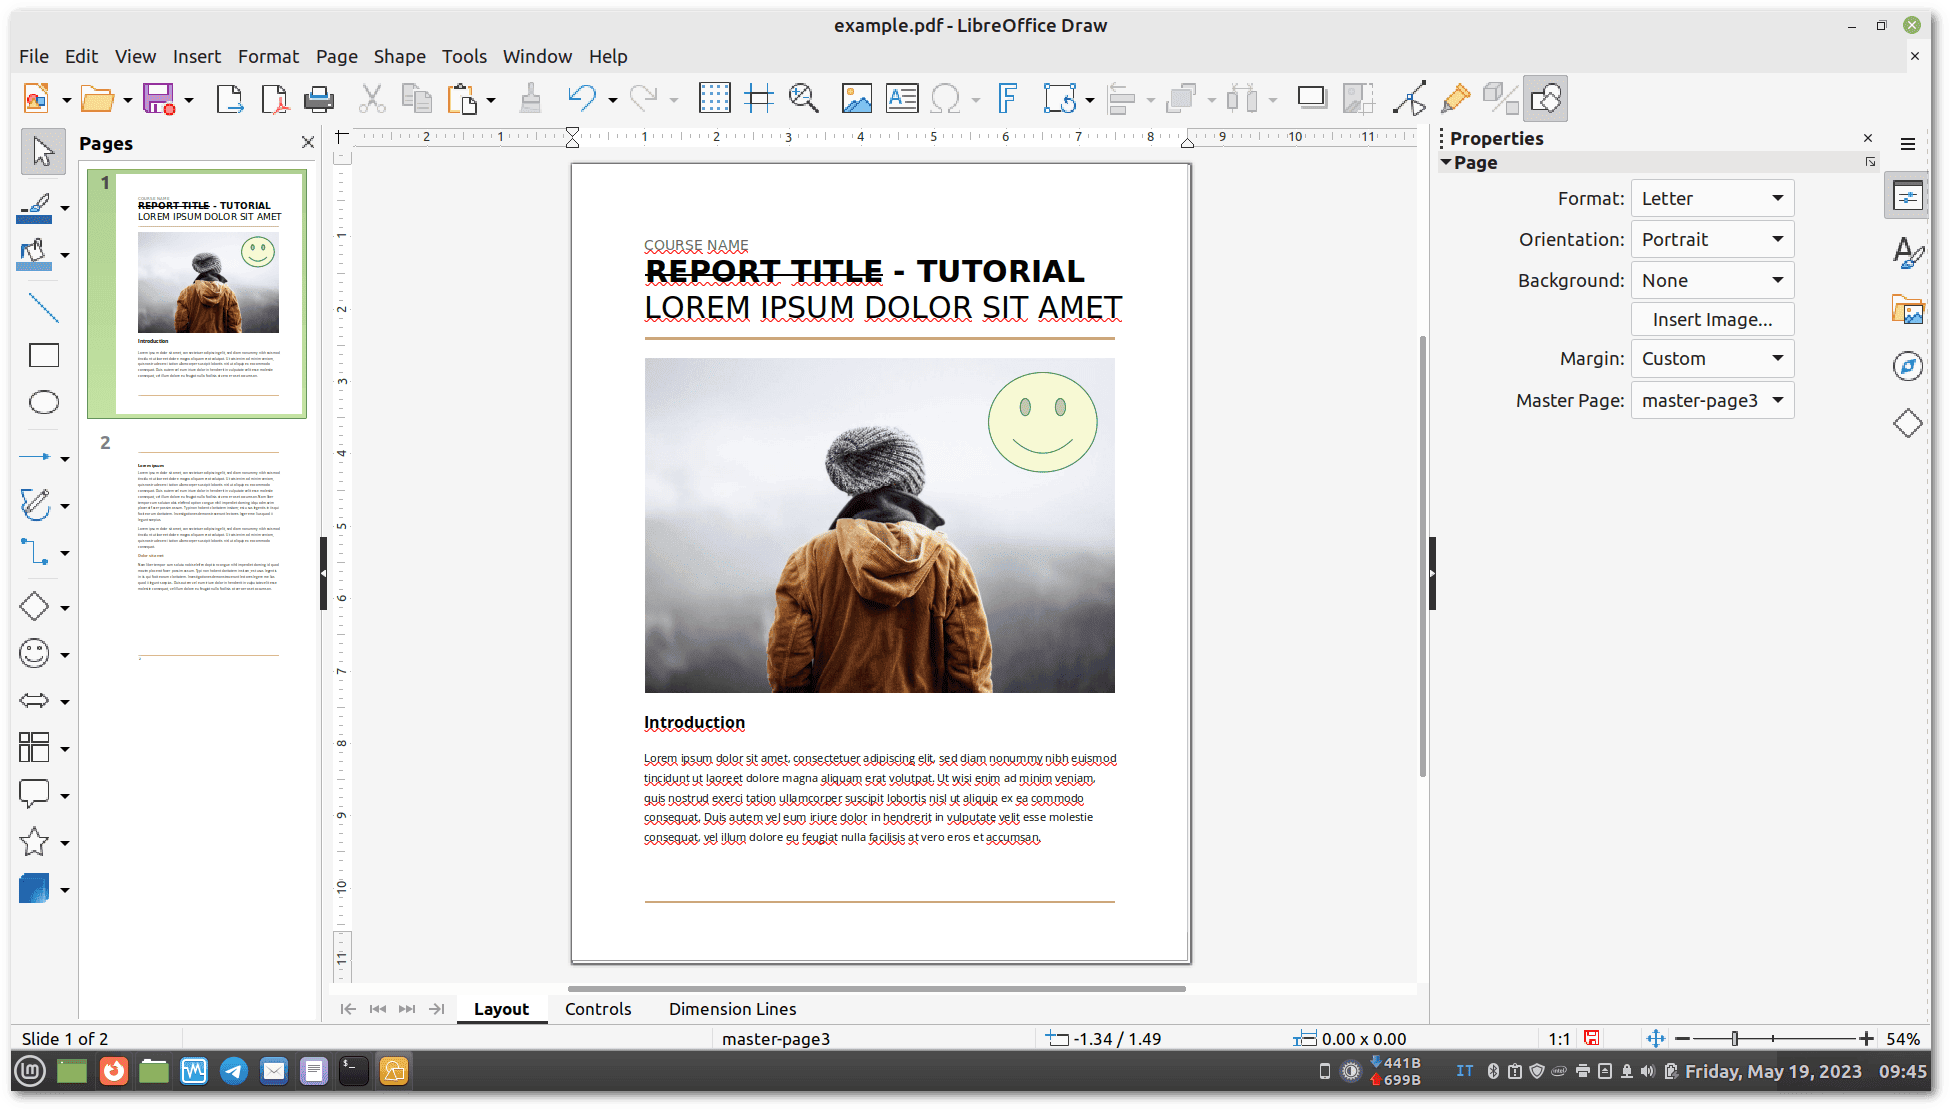 LibreOffice Draw PDF editing